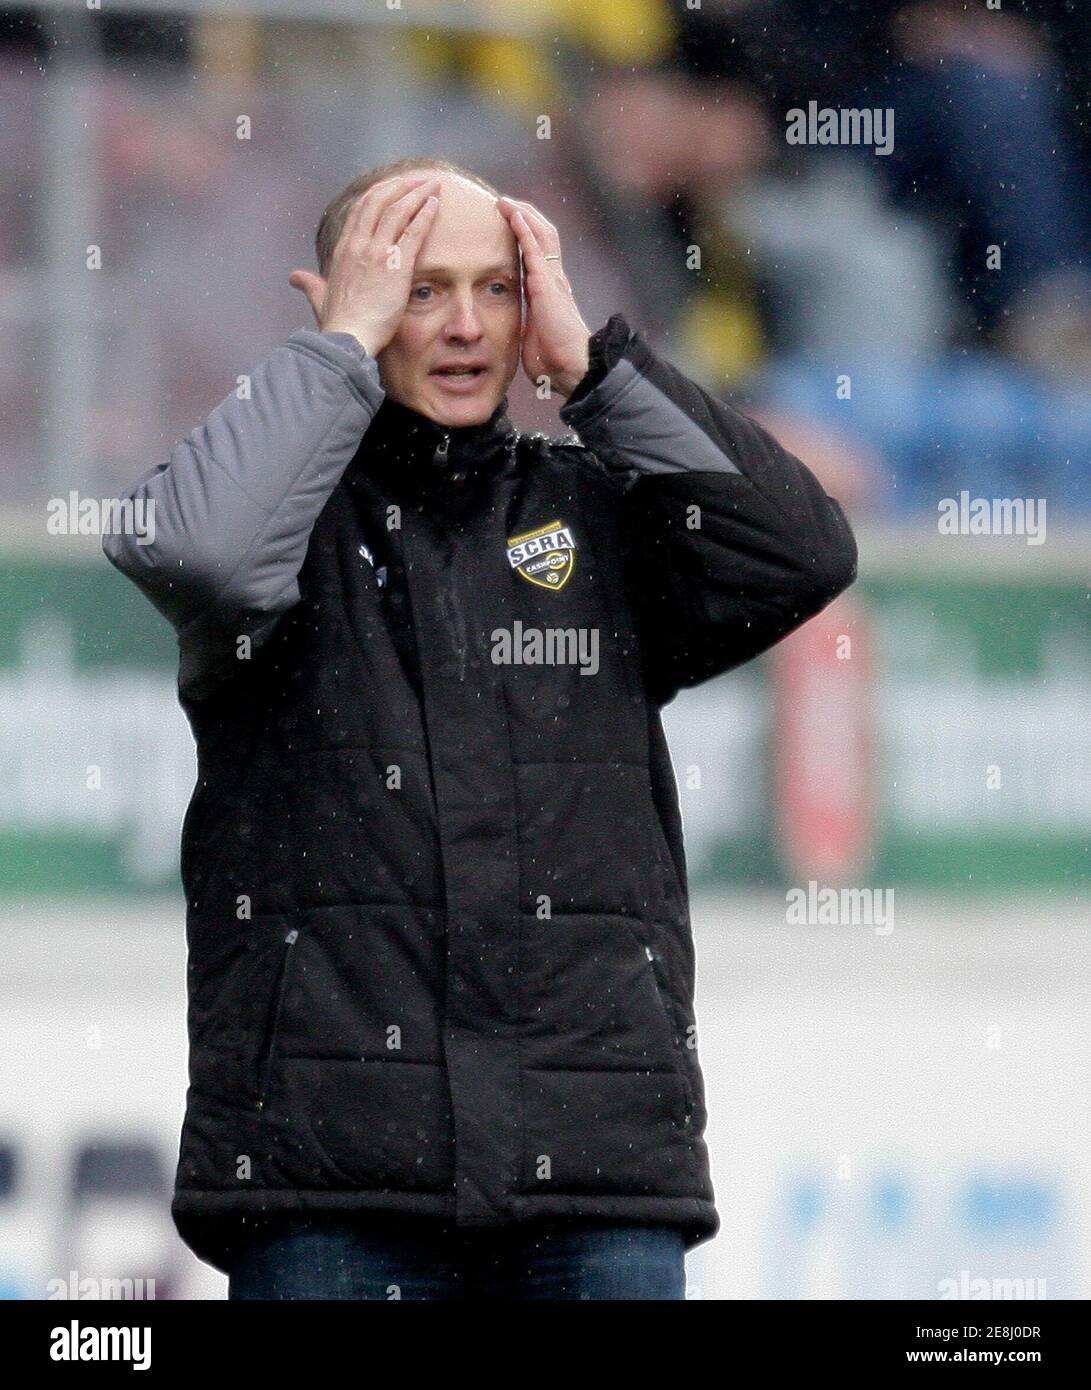 Altach's head coach Georg Zellhofer reacts during their Austrian league soccer match against Salzburg in Altach March 15, 2009. REUTERS/Miro Kuzmanovic (AUSTRIA SPORT SOCCER) Stock Photo